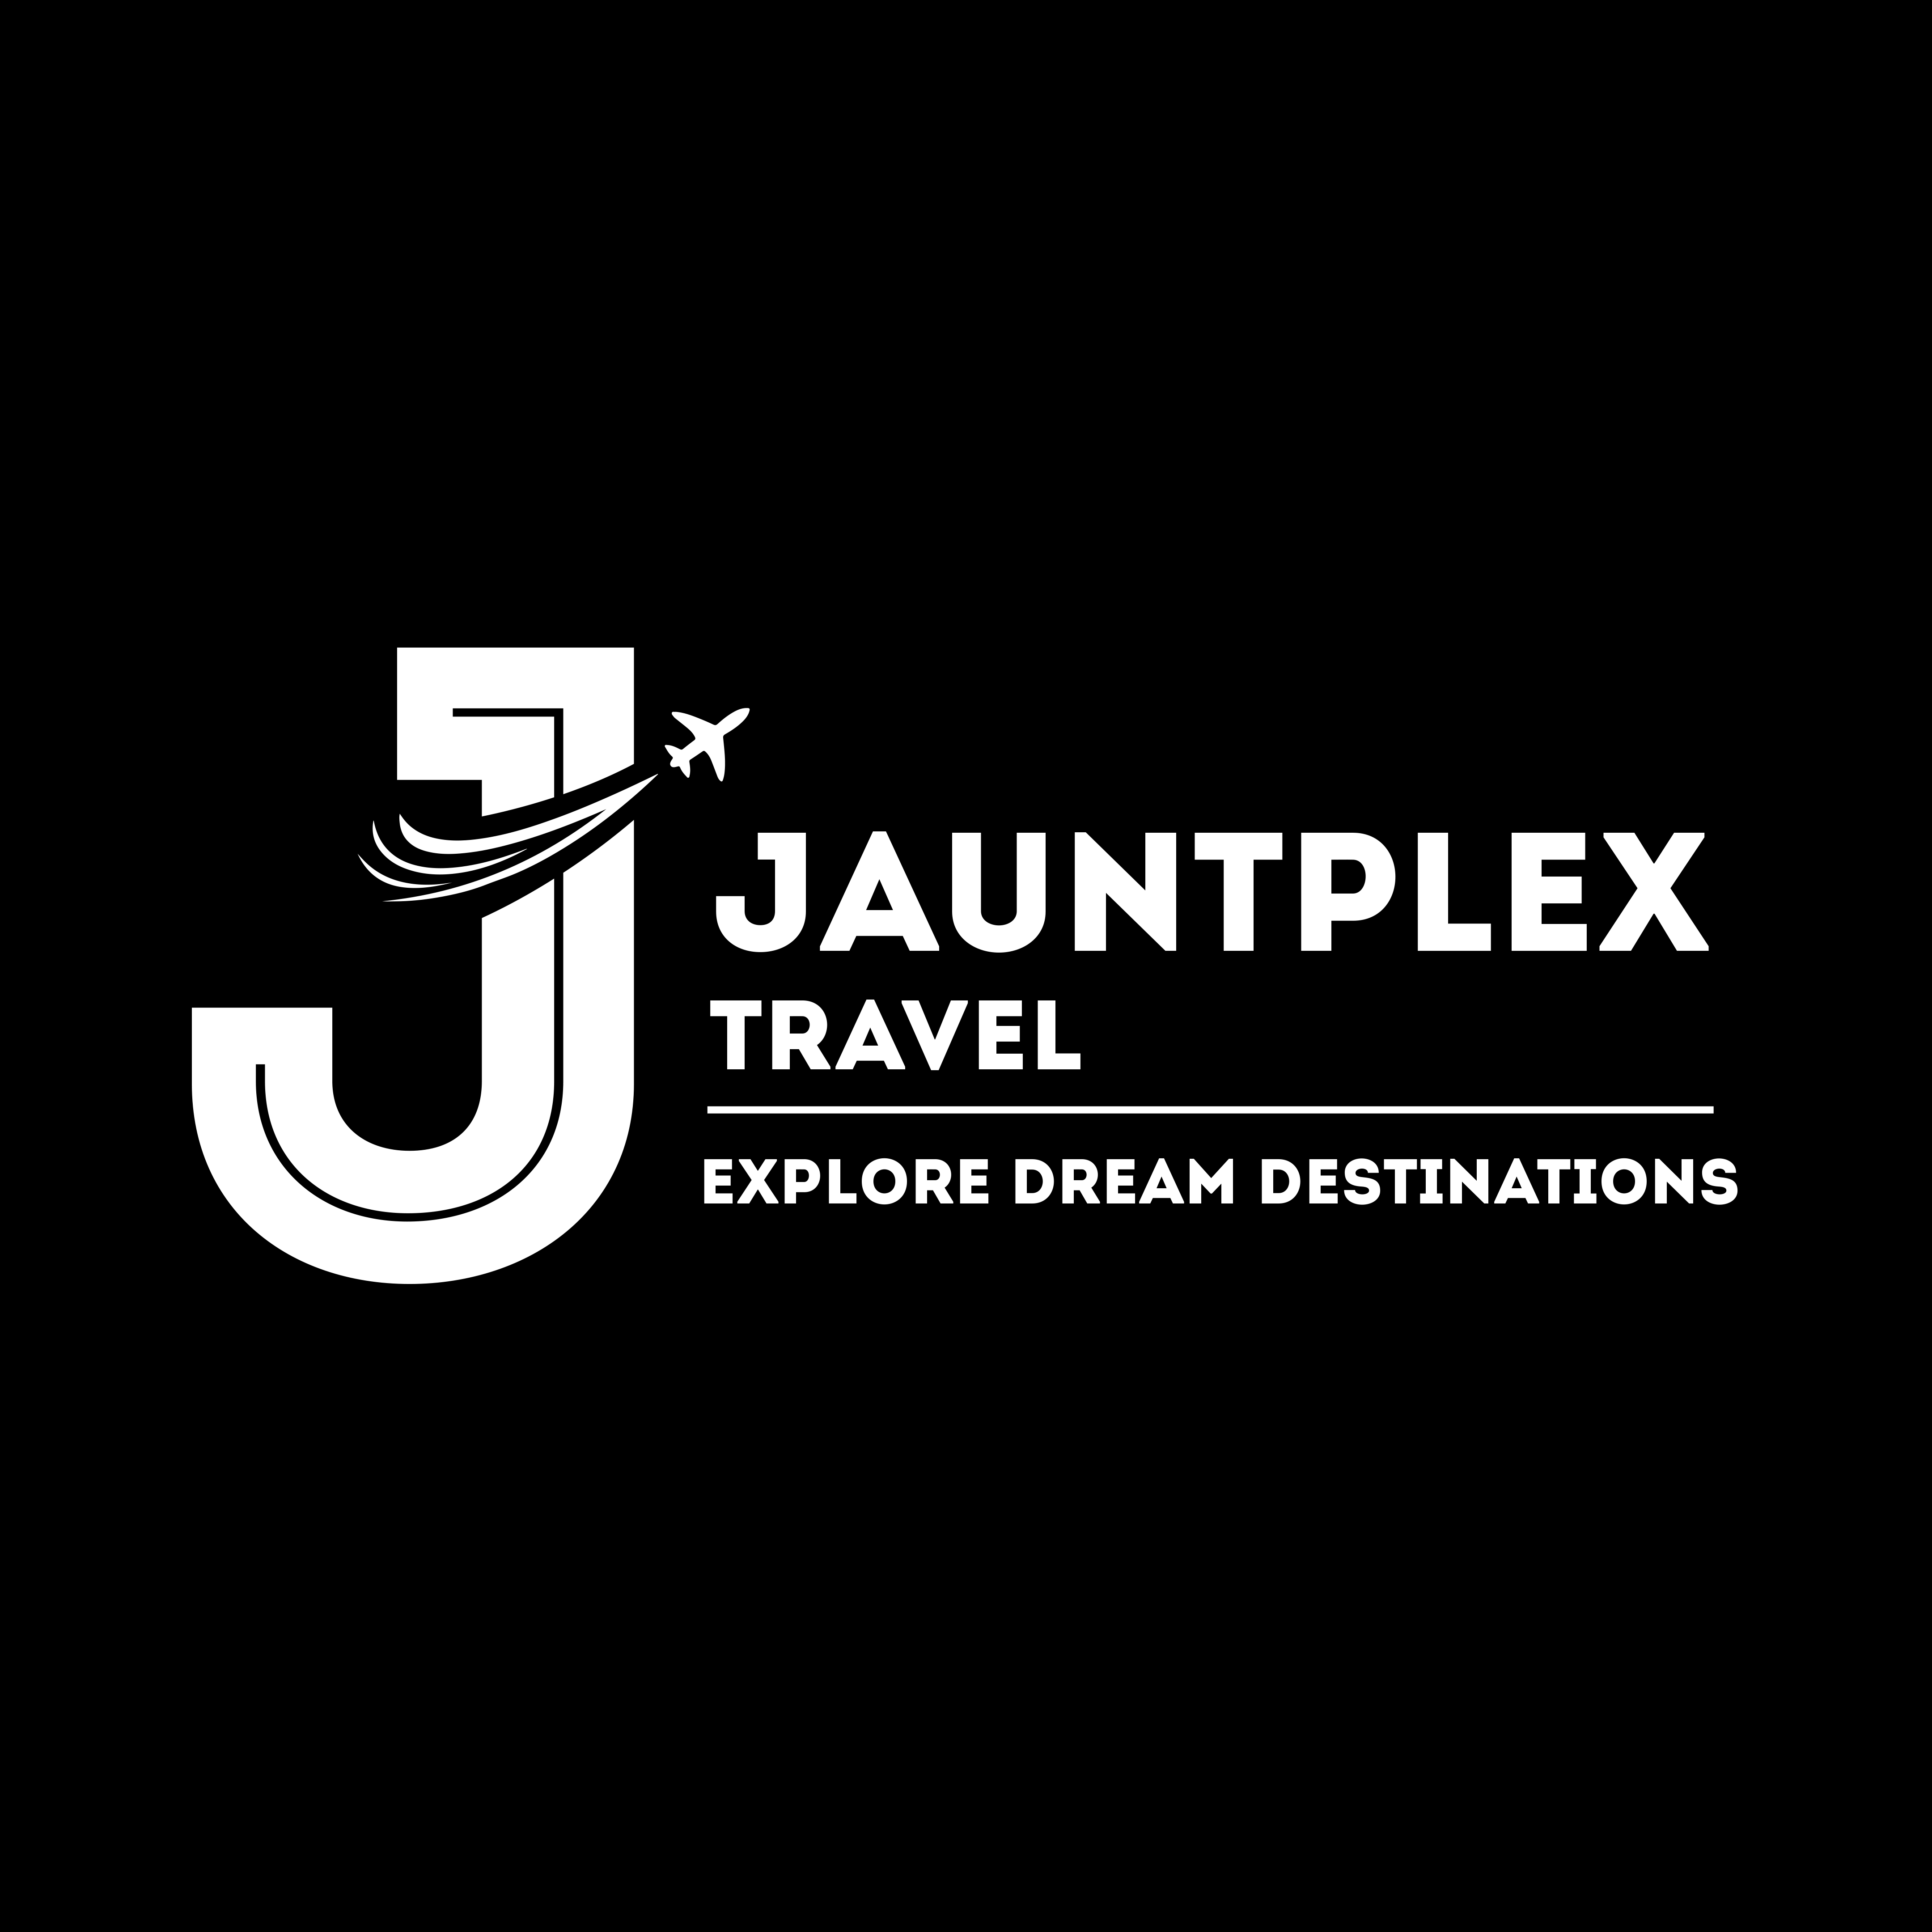 Jauntplex Travel